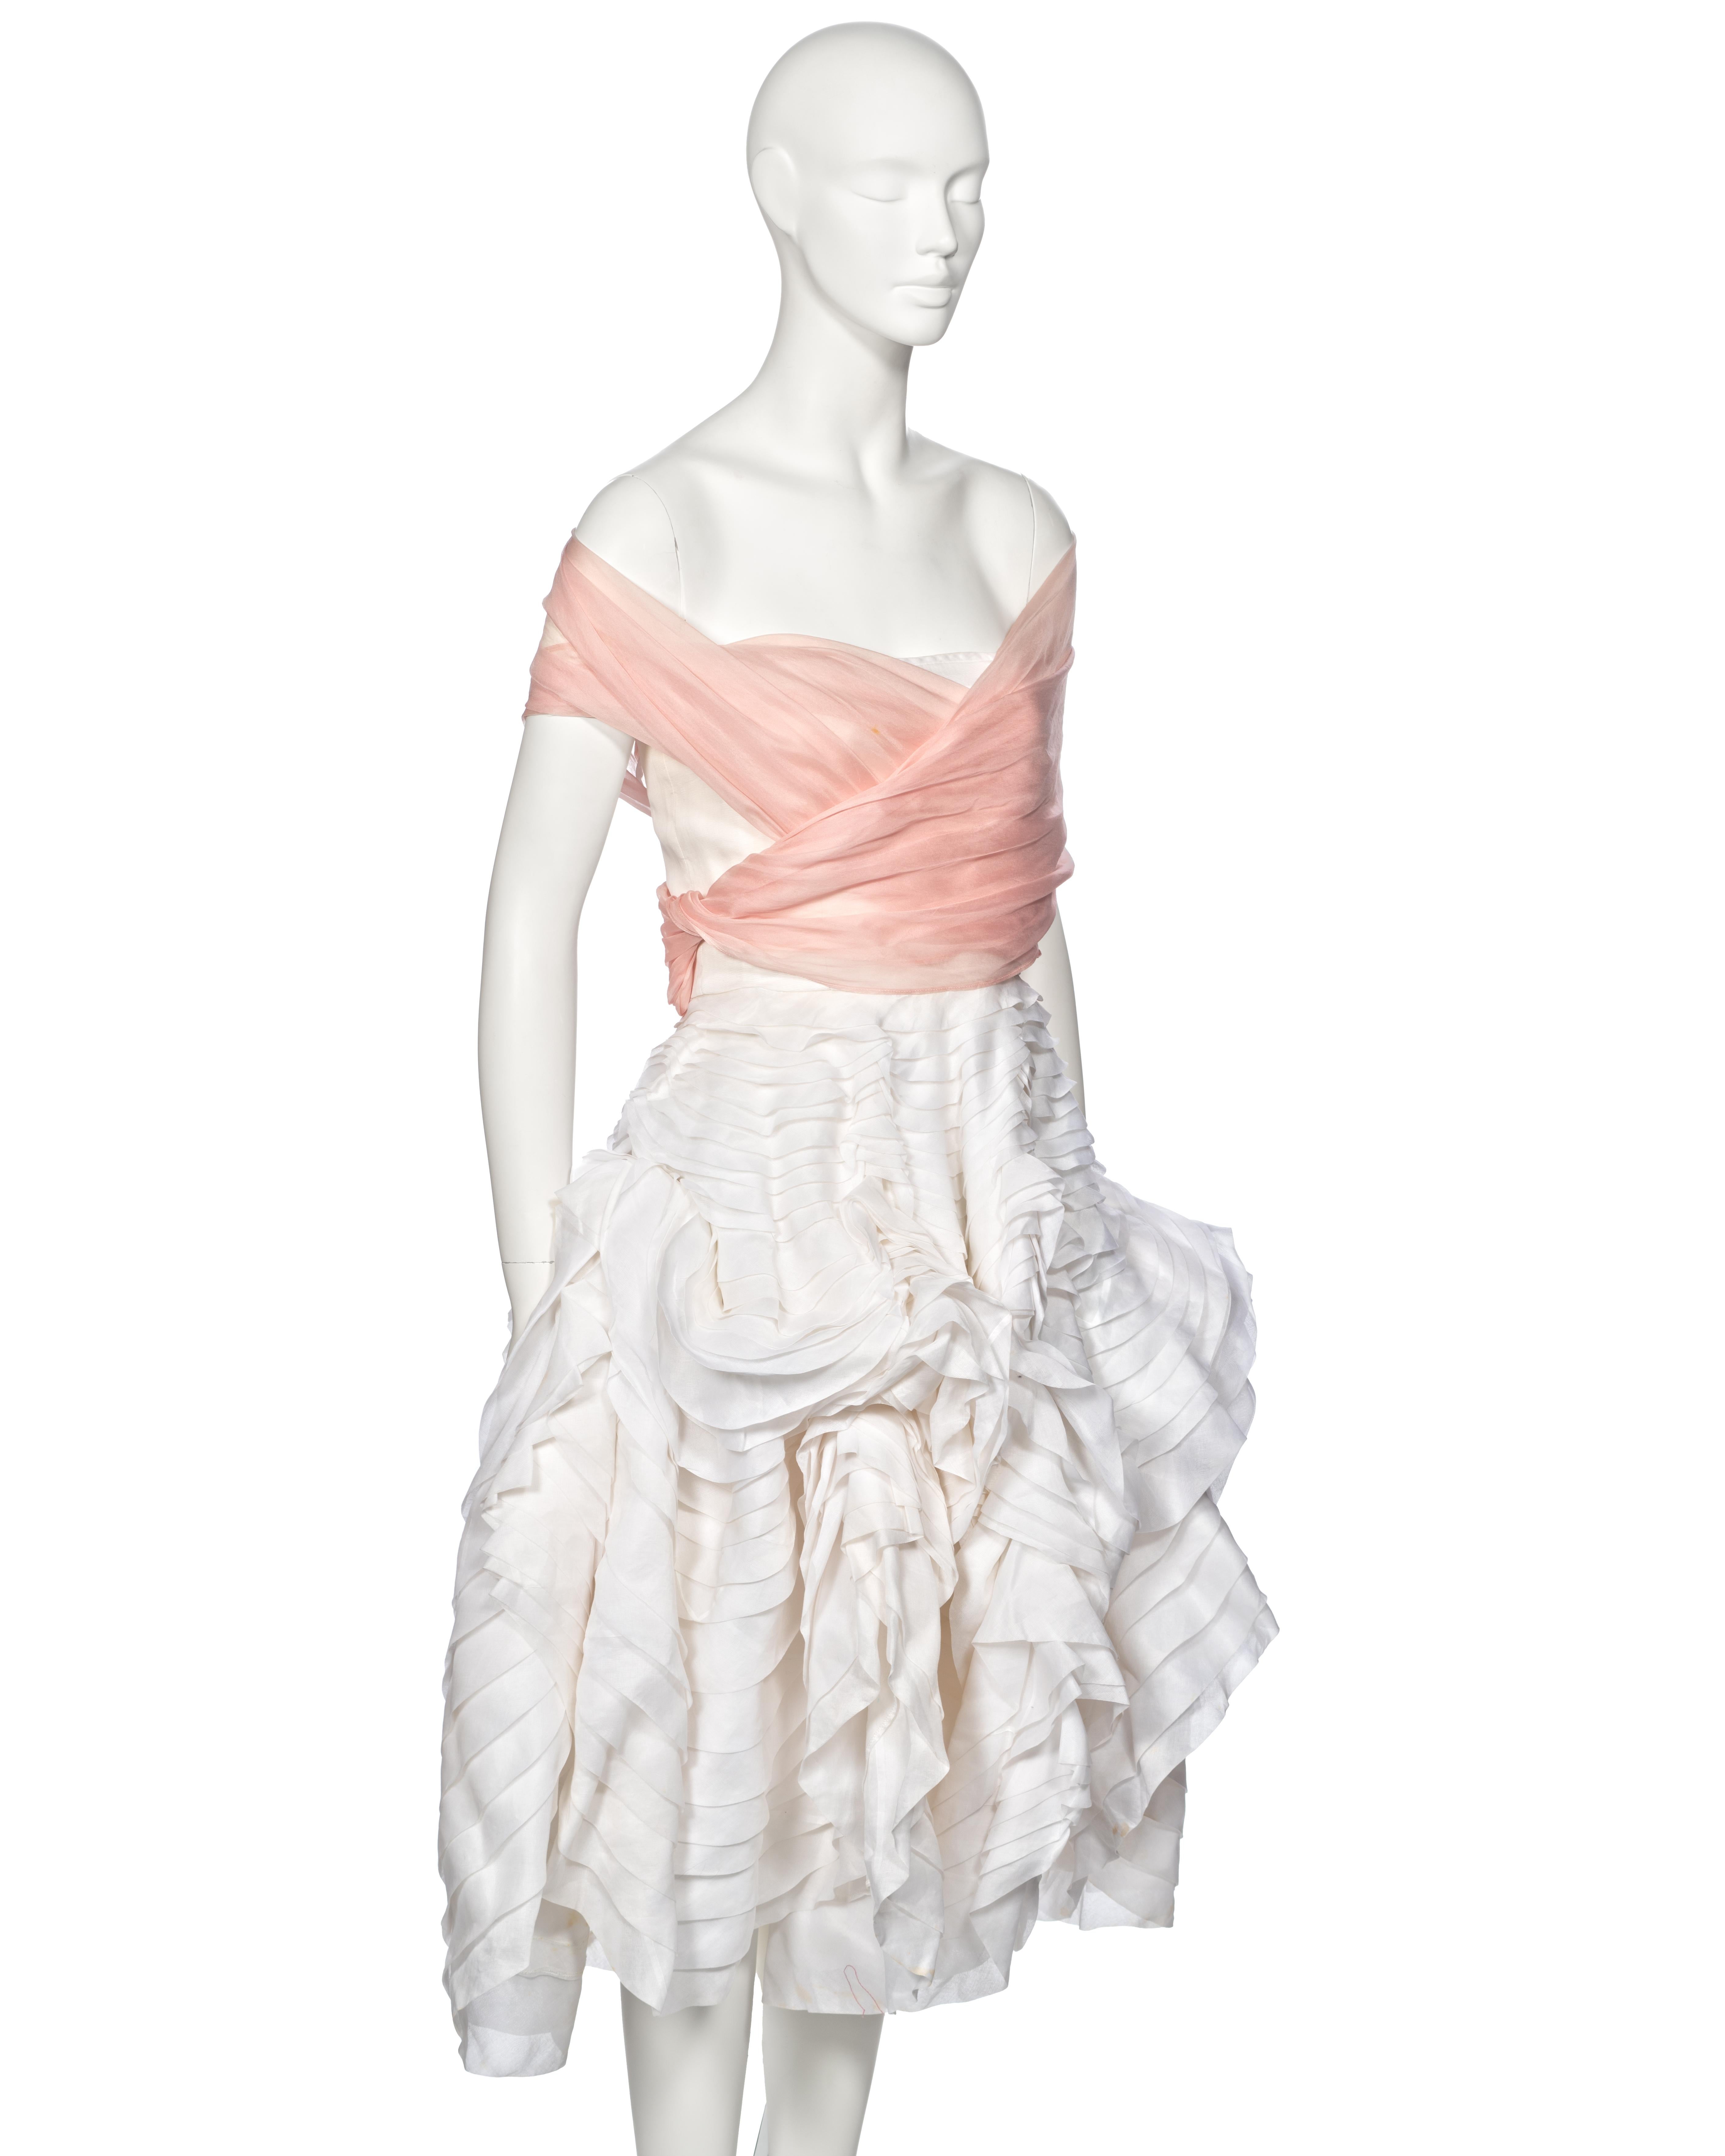 John Galliano Blanche DuBois Clam Dress, ss 1988 For Sale 7